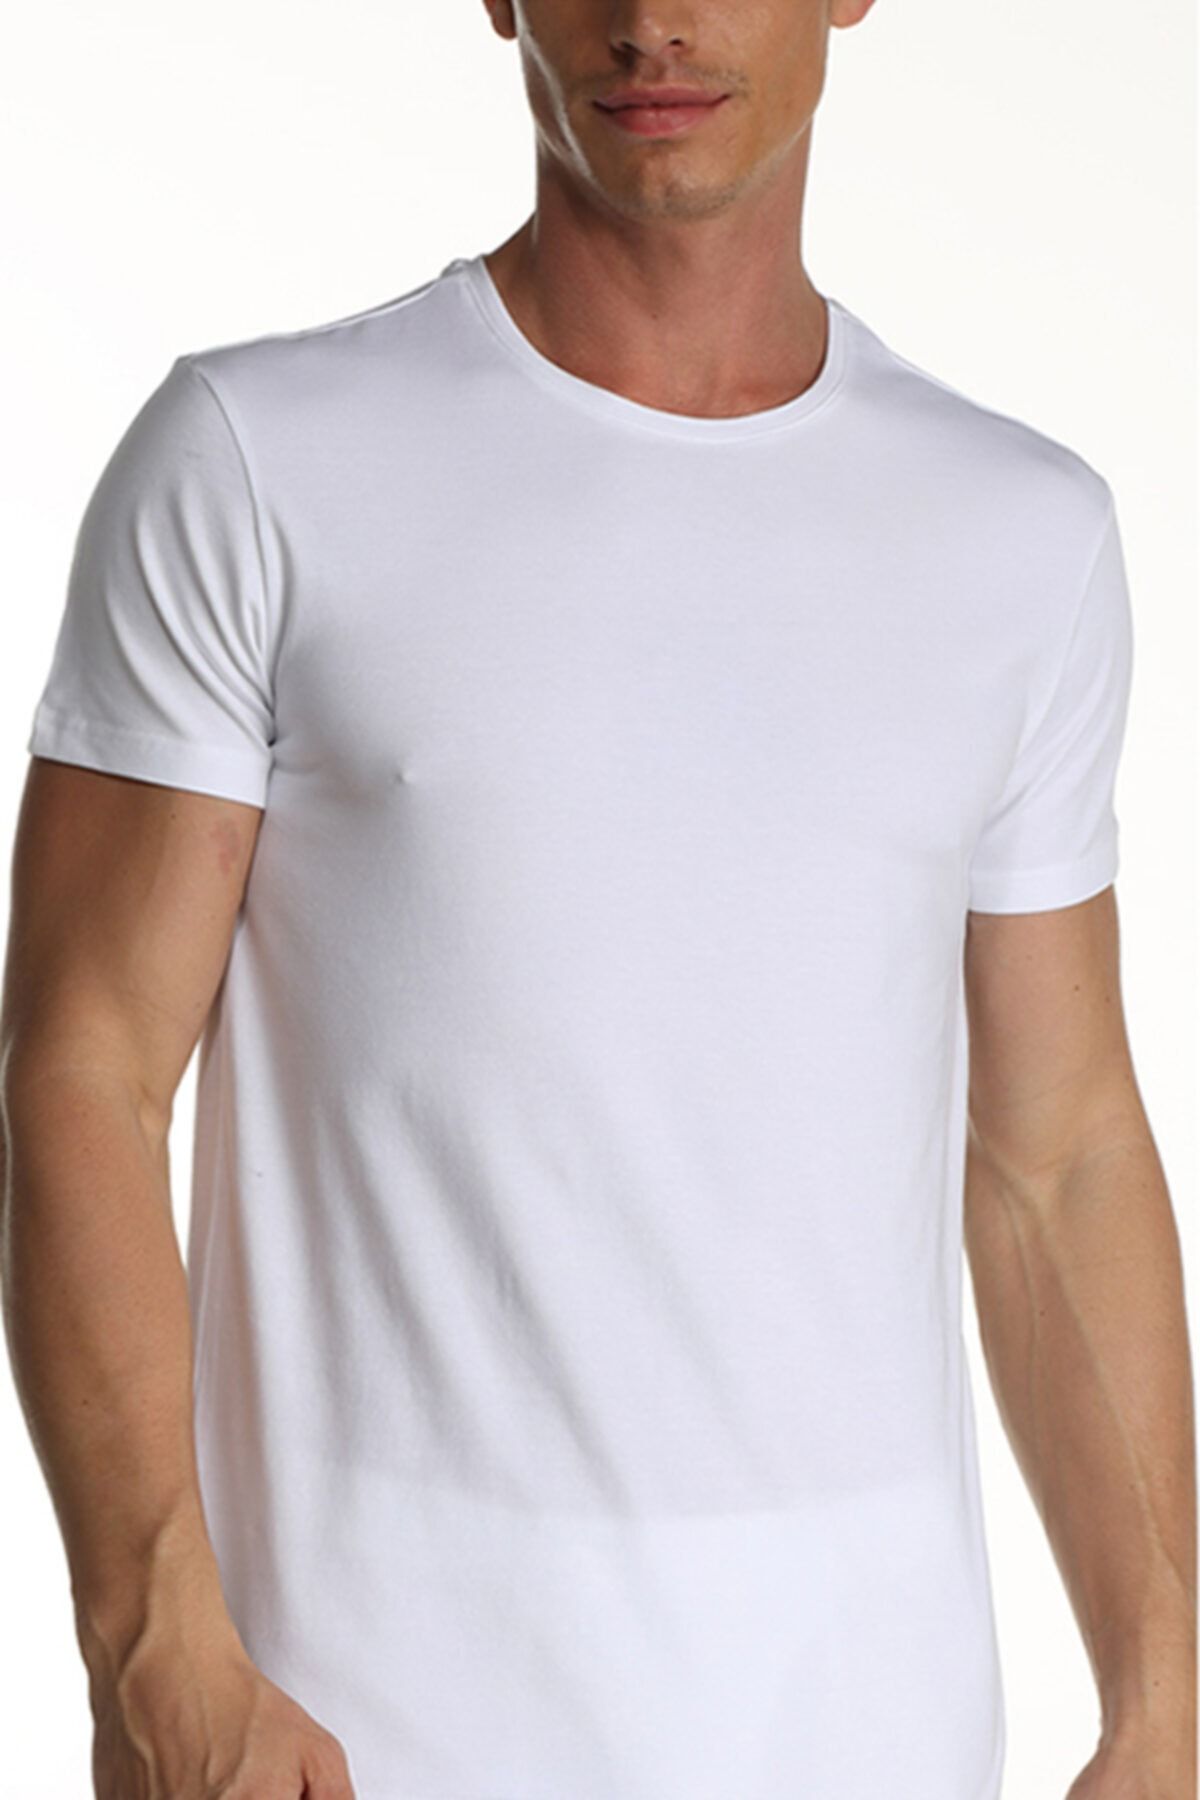 Çift Kaplan Erkek Elastanlı Beyaz T-shirt 0954